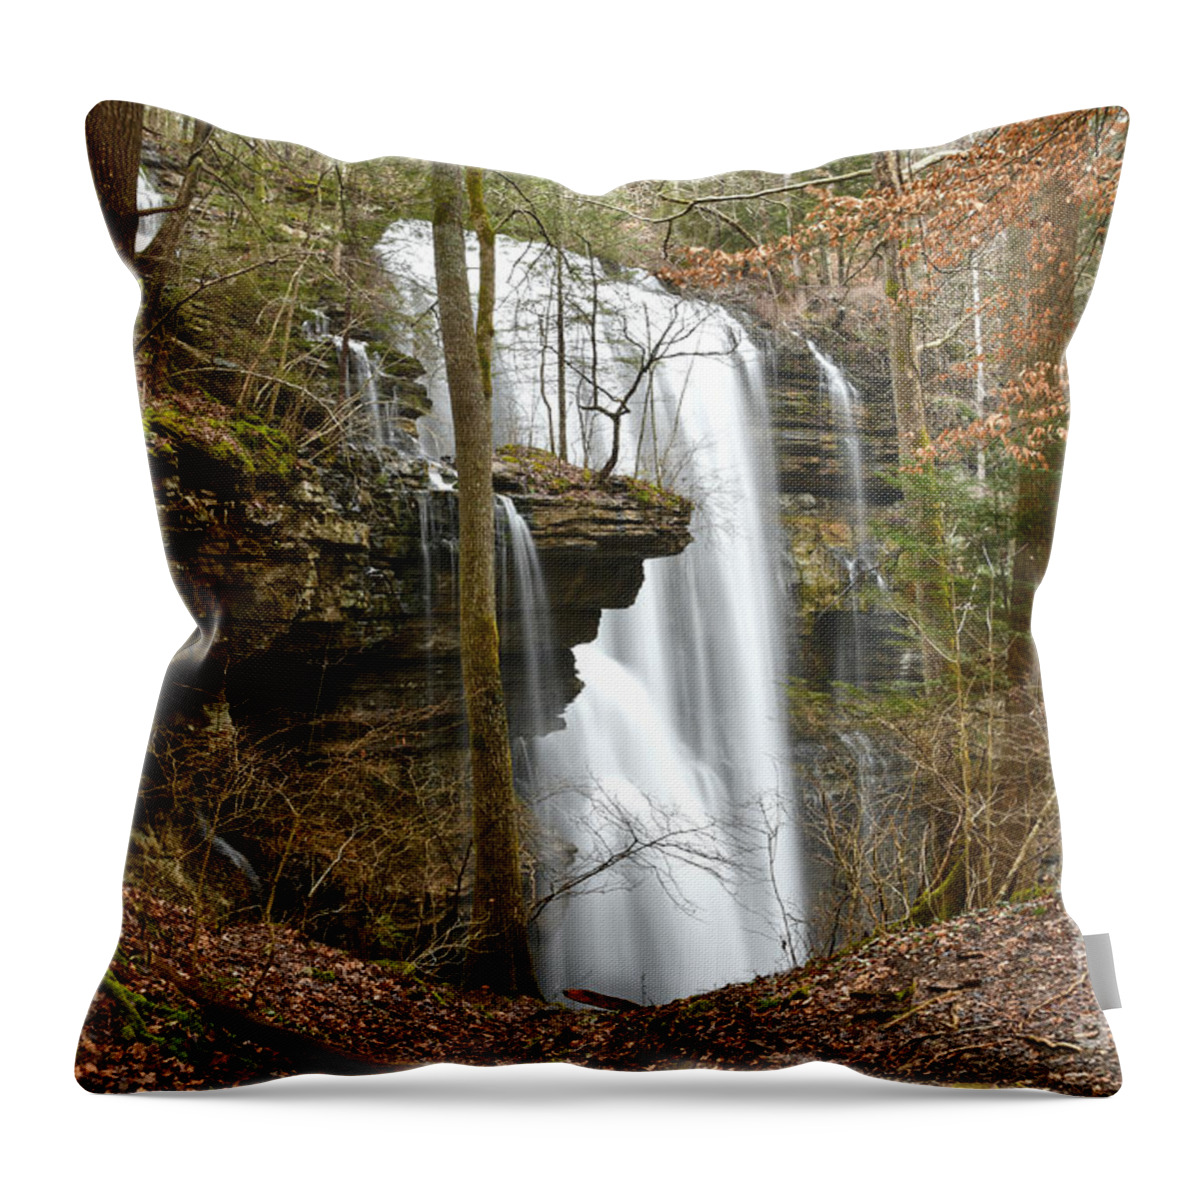 Virgin Falls Throw Pillow featuring the photograph Virgin Falls 1 by Phil Perkins